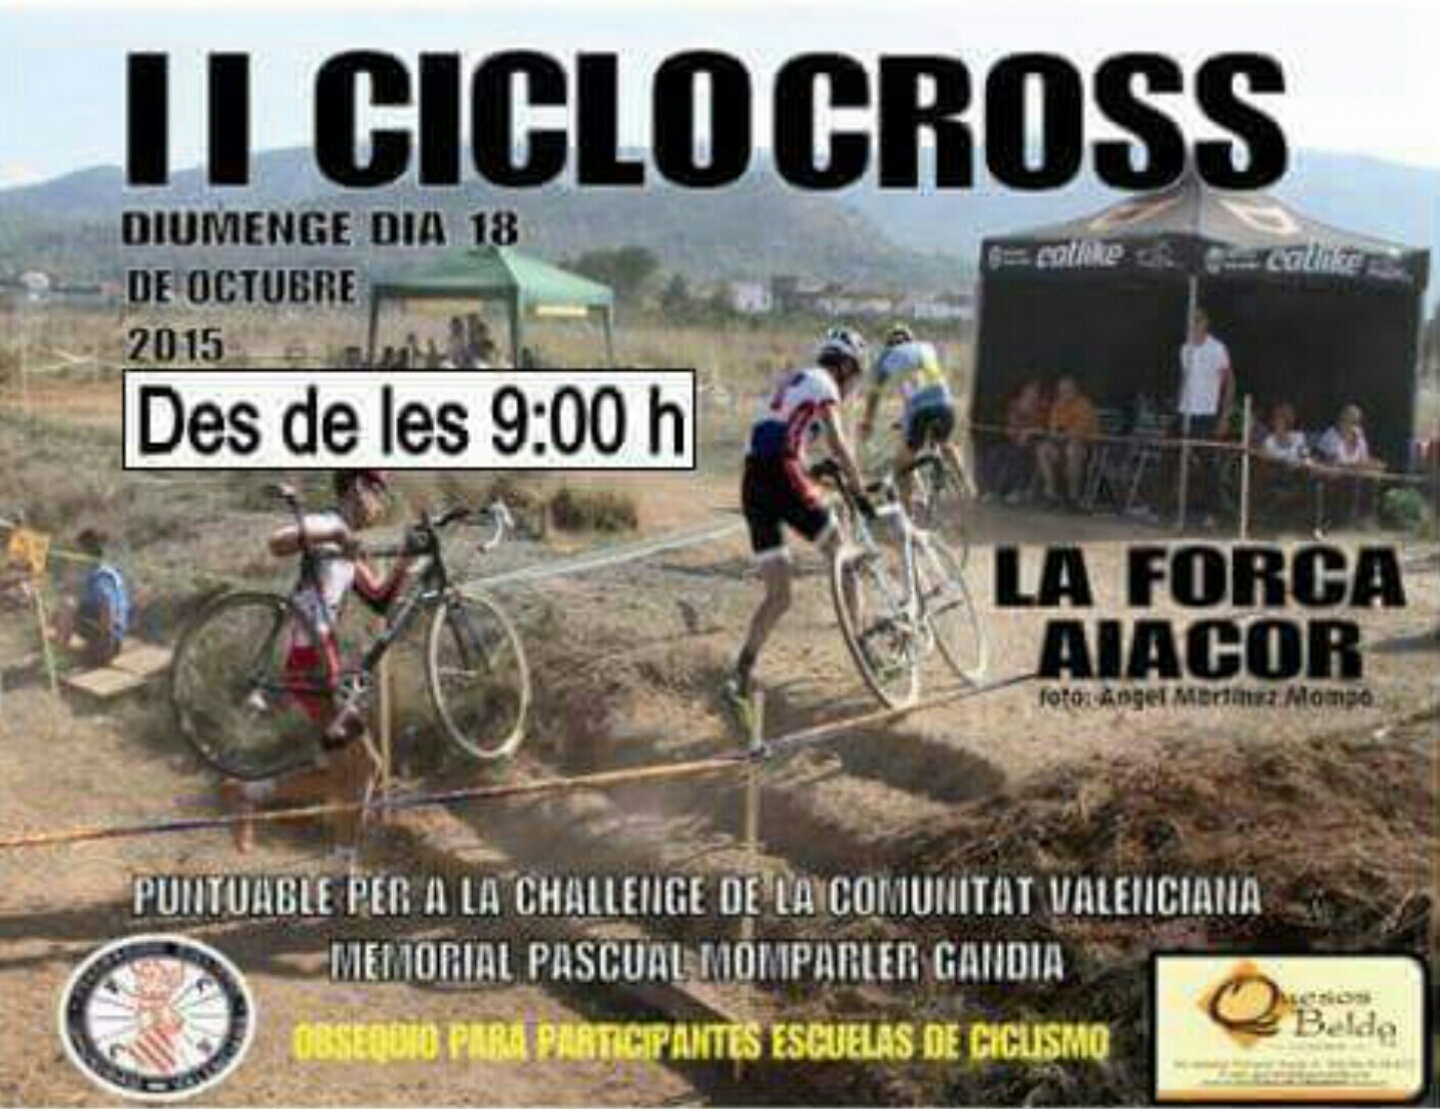 II Ciclocross   Aiacor